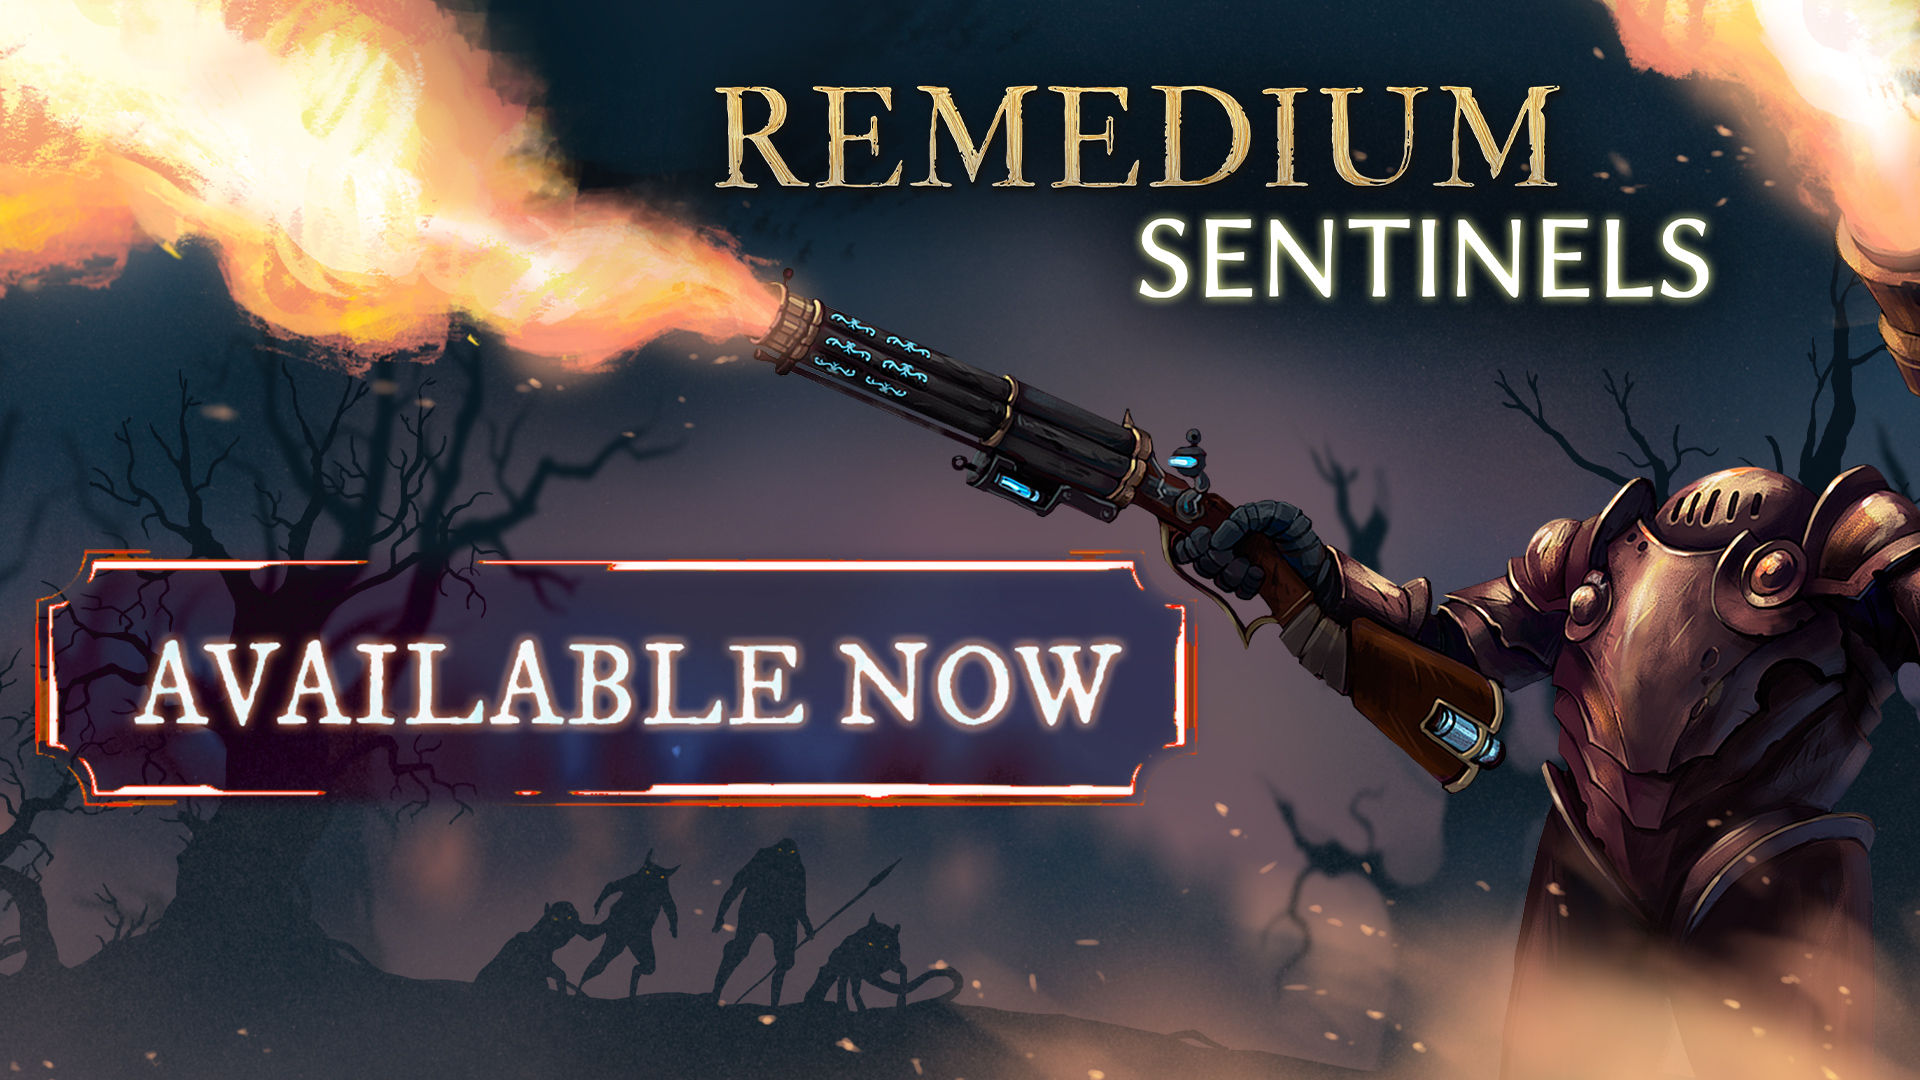 REMEDIUM Sentinels download the last version for apple